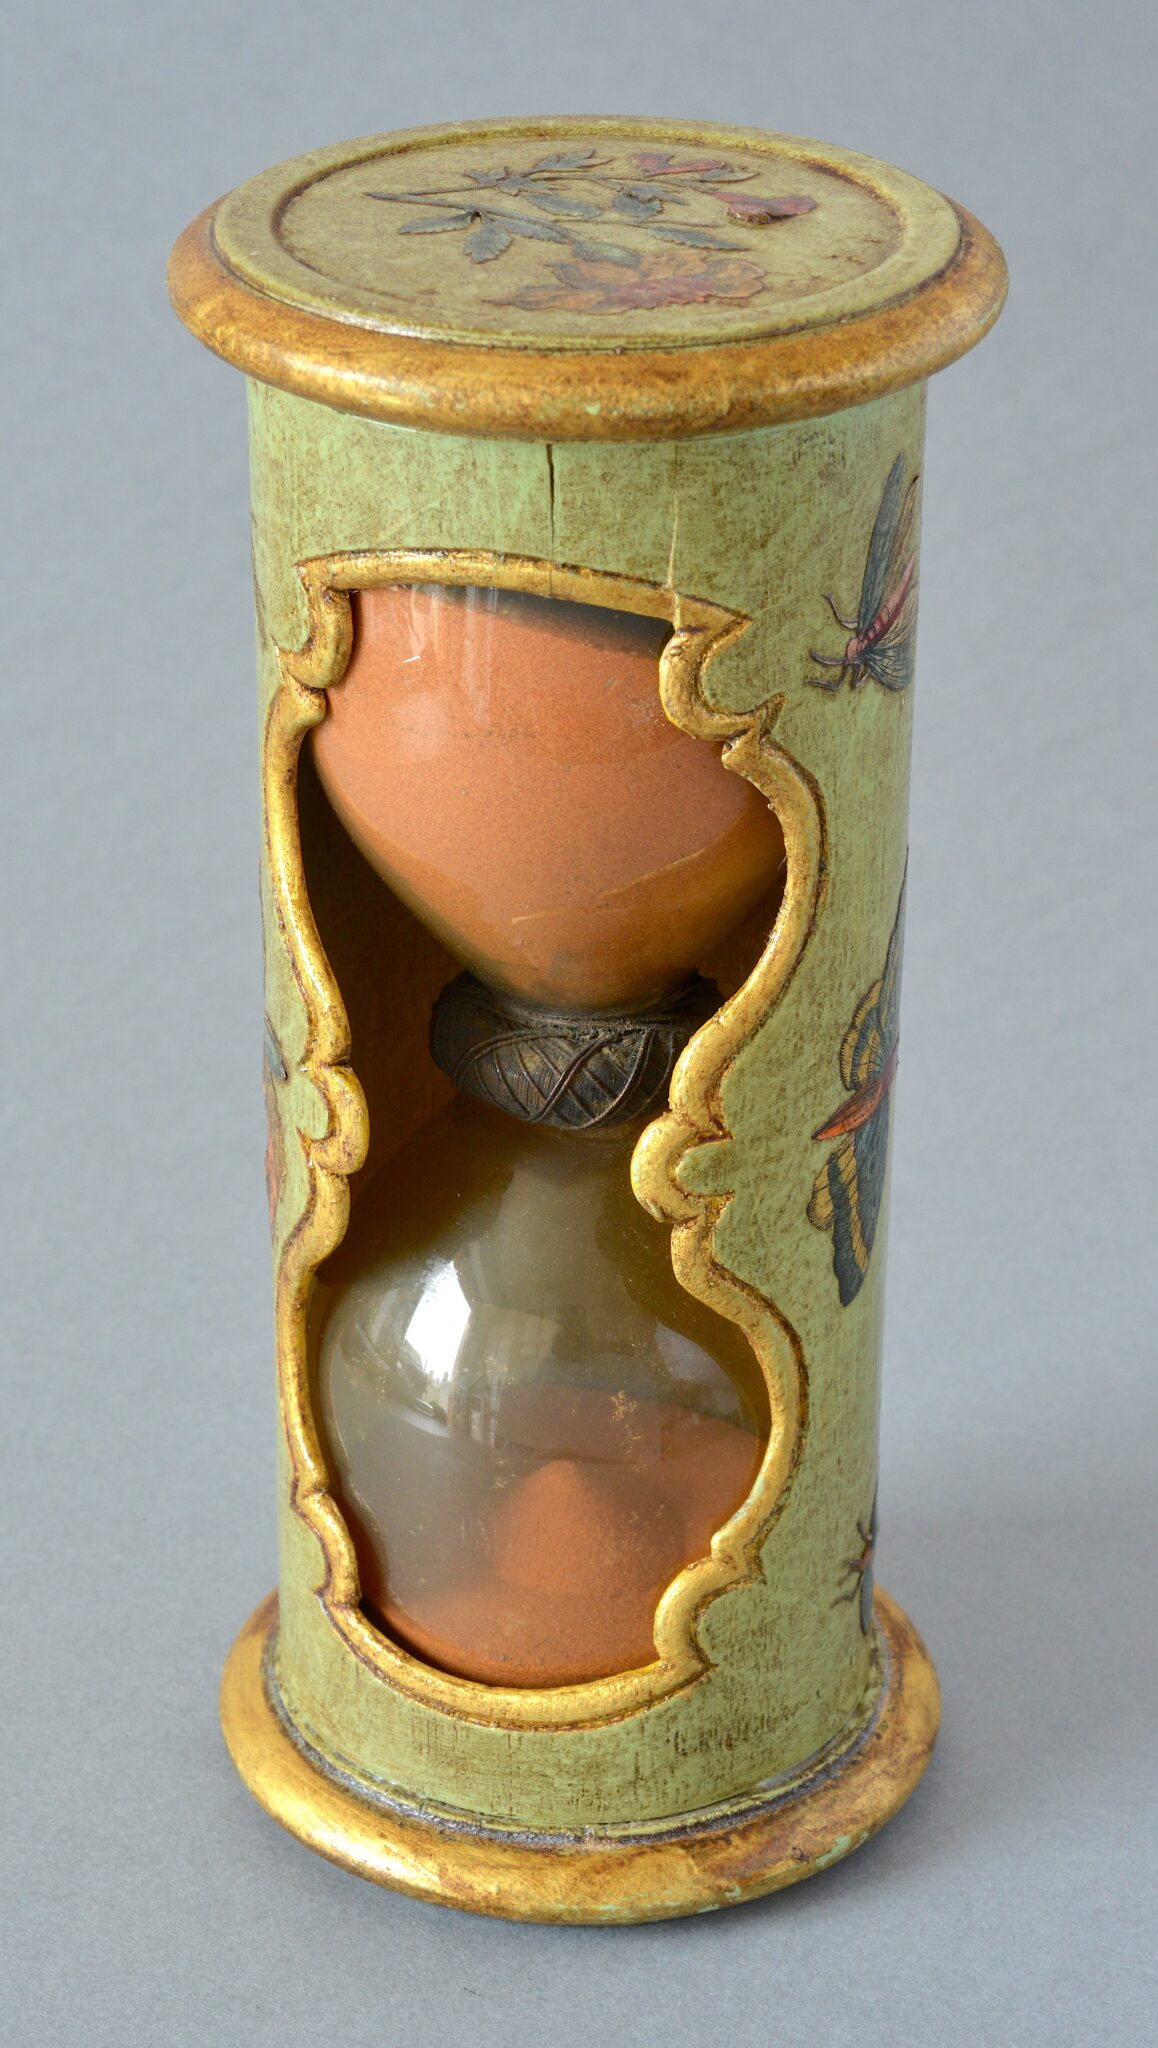 Arte Povera hourglass made in France or Italy circa 1720